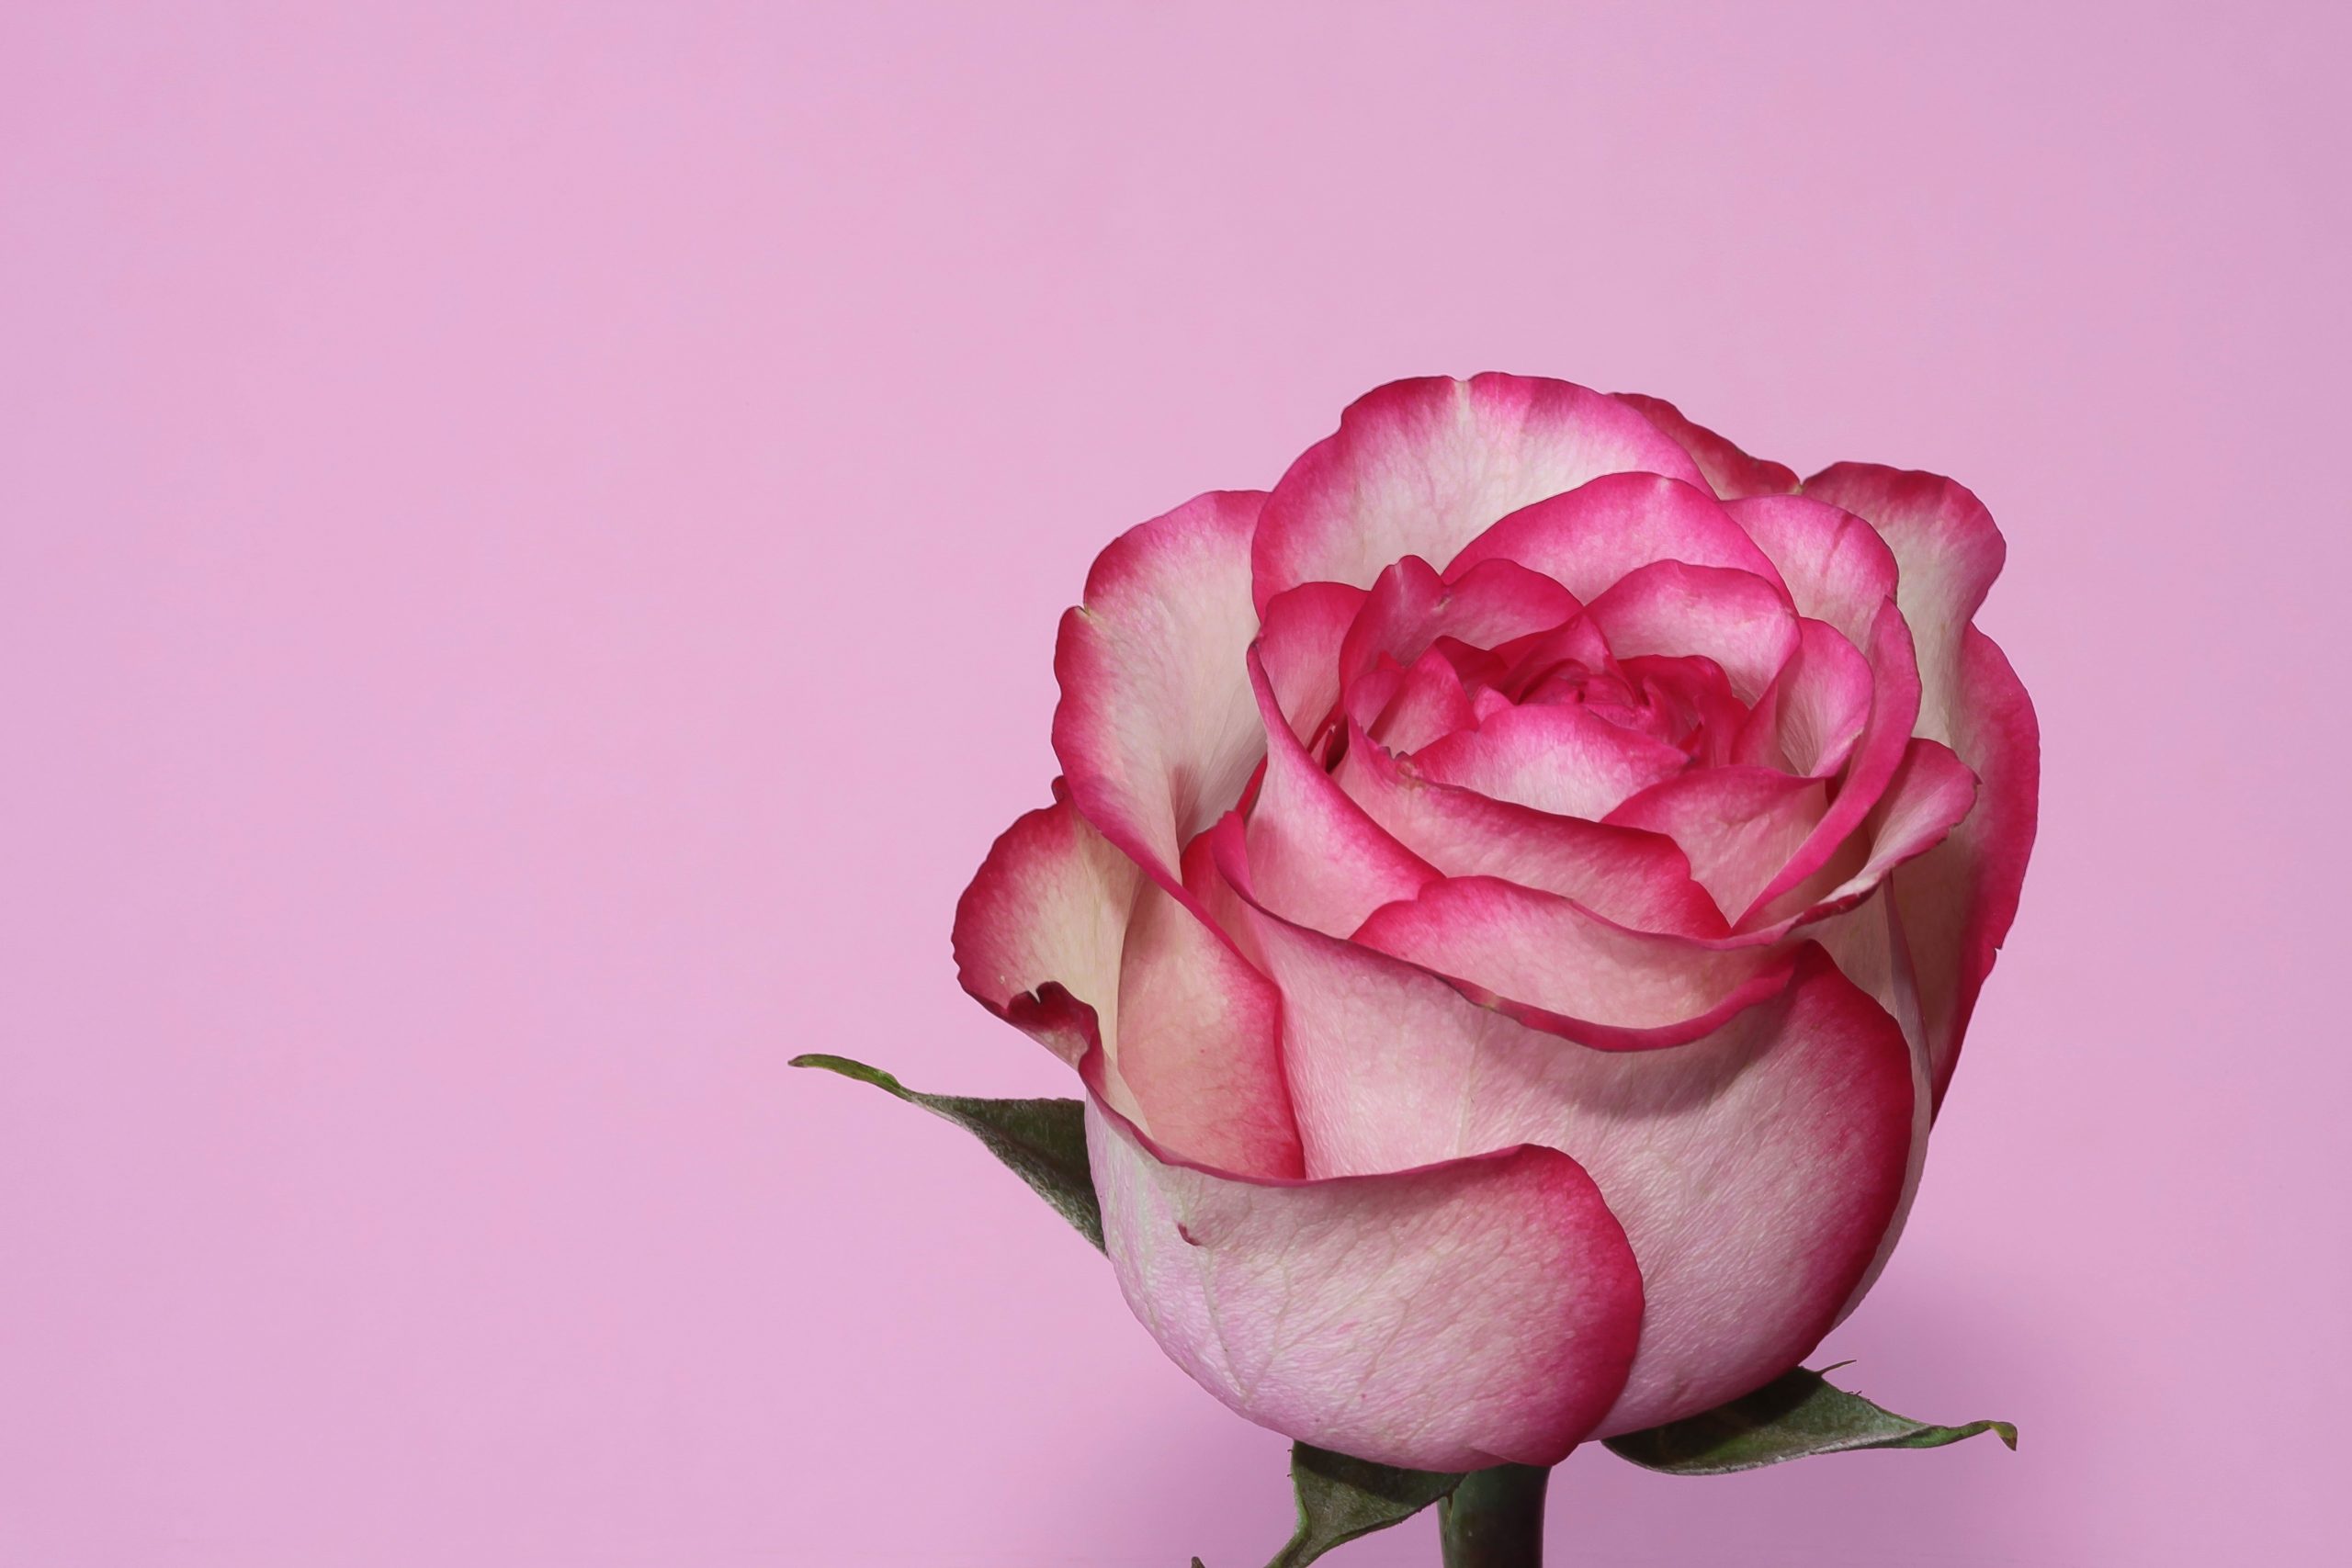 White and pink rose wallpaper, rose, Rose pink, flower, macro, close-up